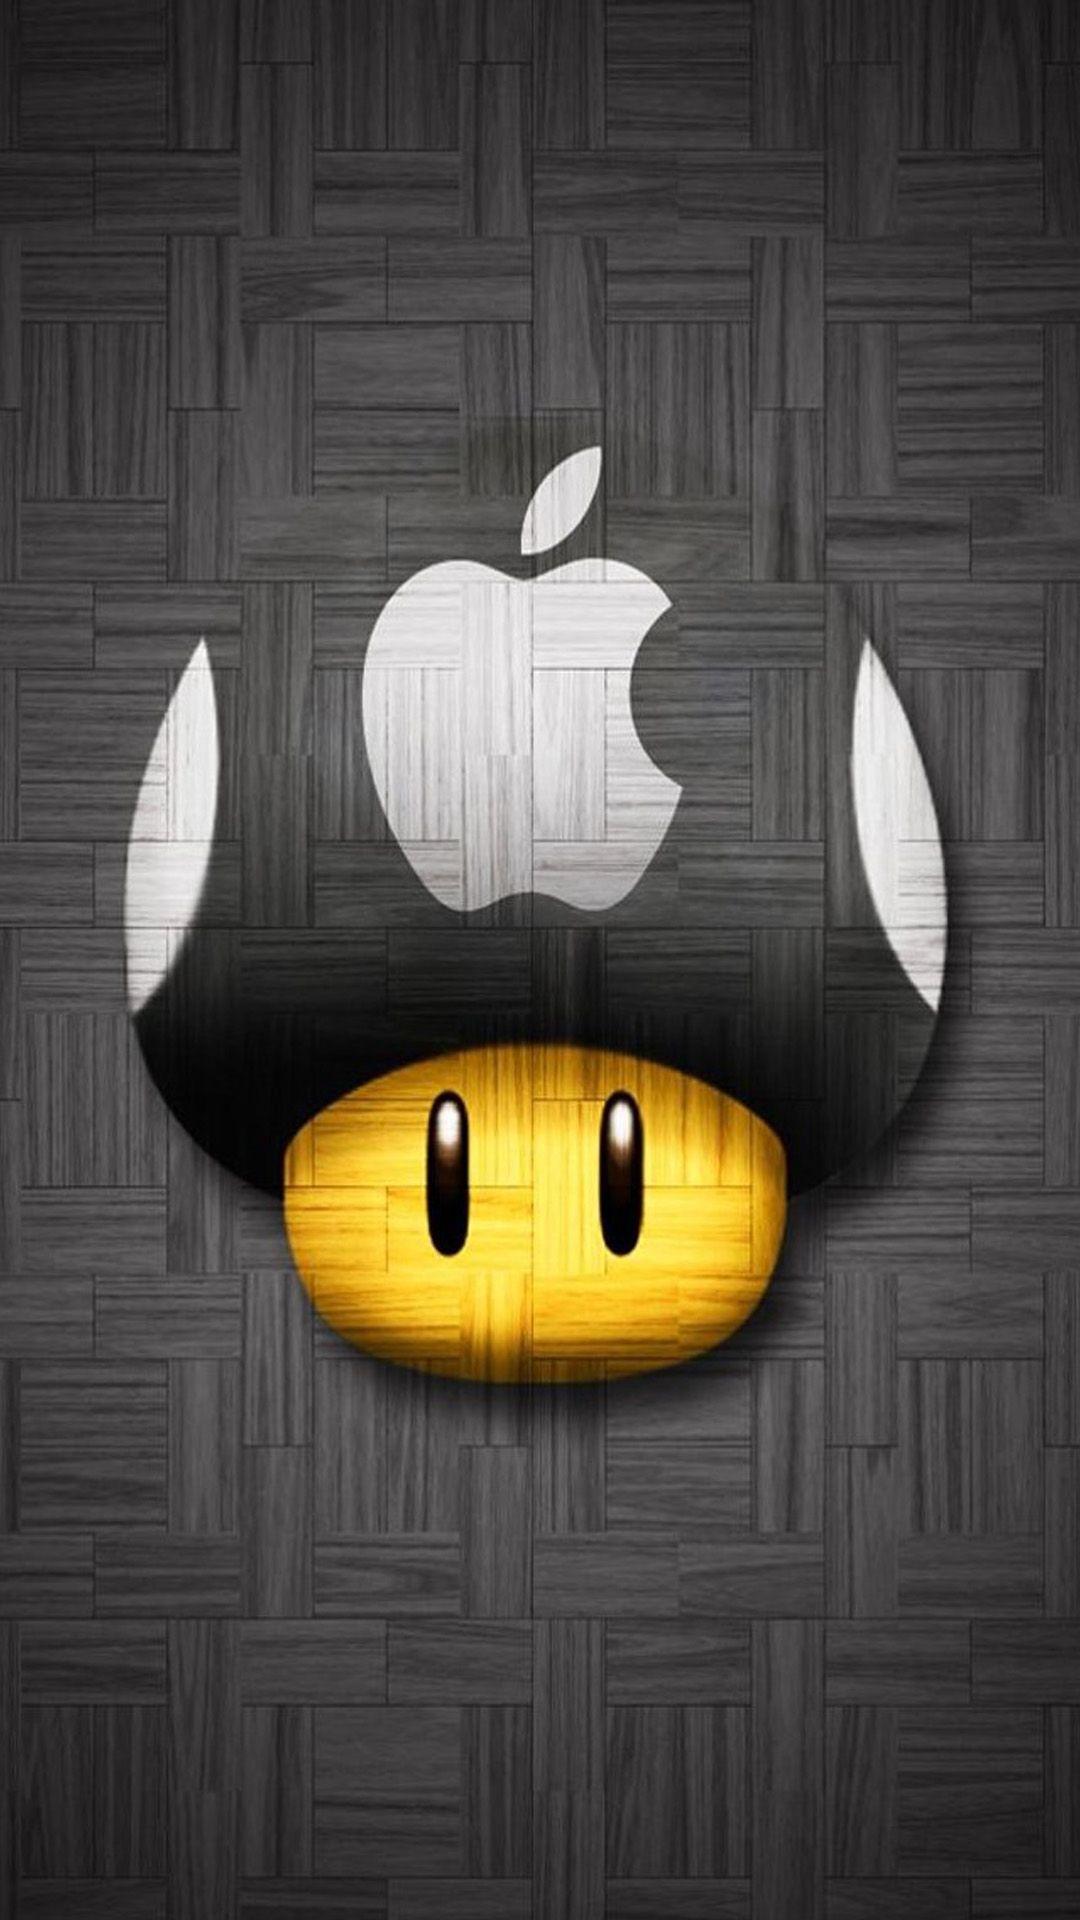 Cool Apple Logo - Cool Apple Logo Desktop image. Apple Fever!. iPhone